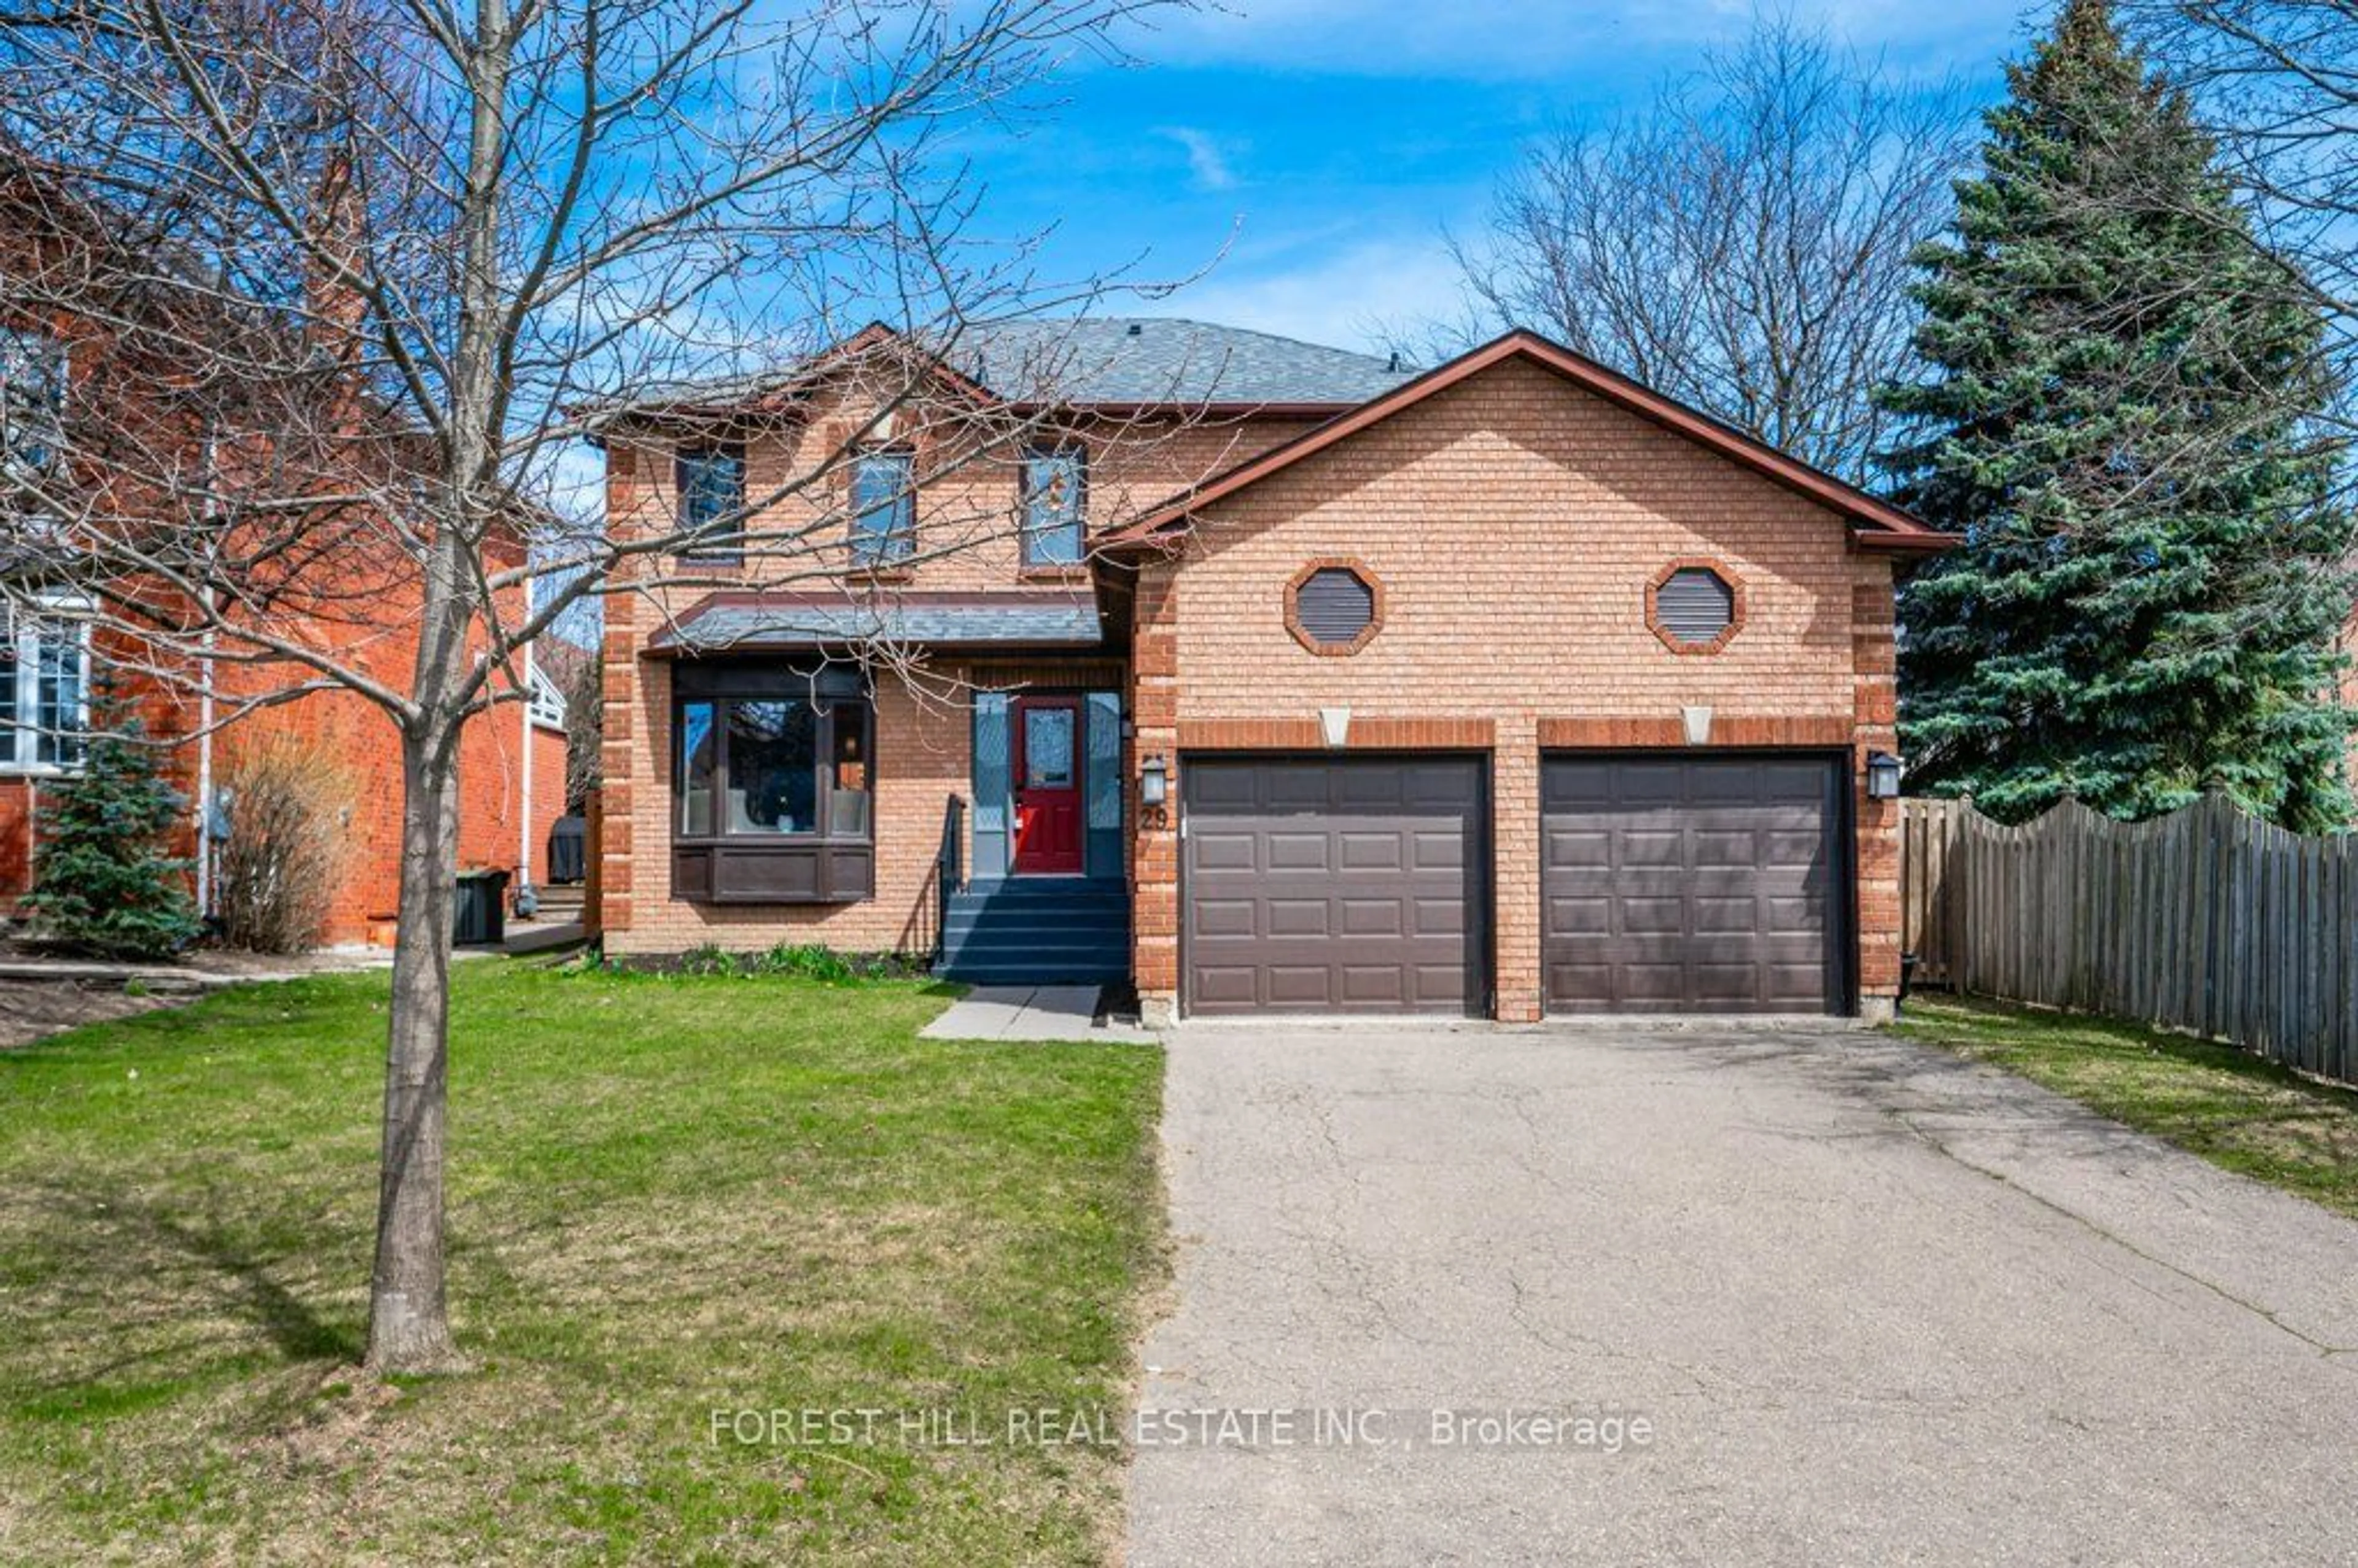 Home with brick exterior material for 29 Fernbrook Cres, Brampton Ontario L6Z 3P2